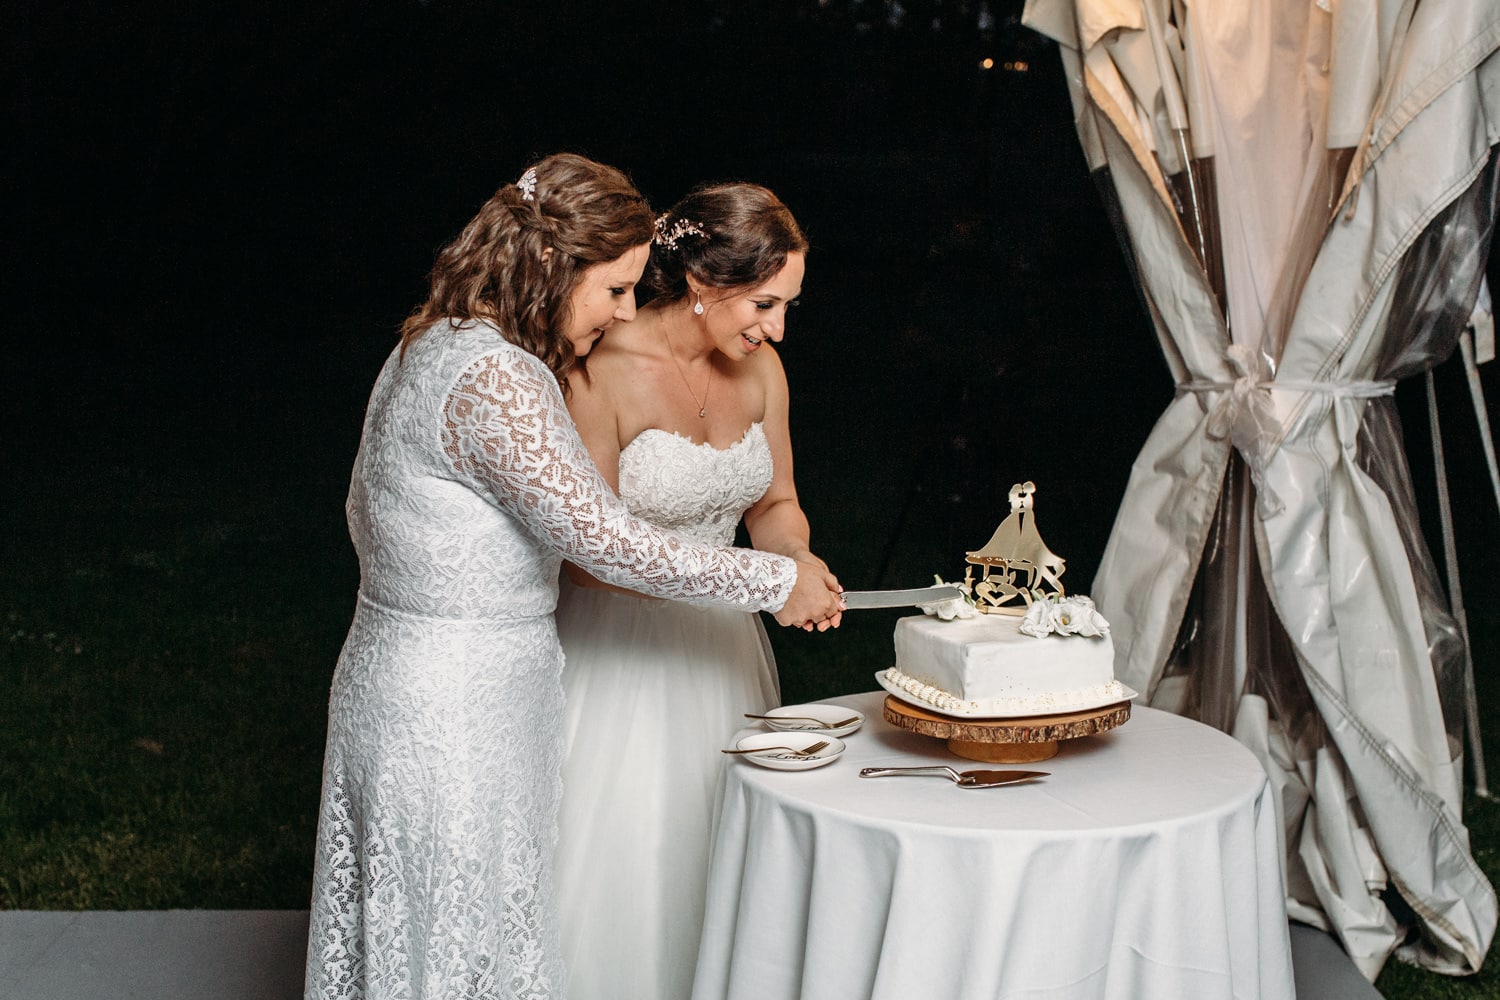 hebrew wedding cake topper at lgbtq jewish wedding